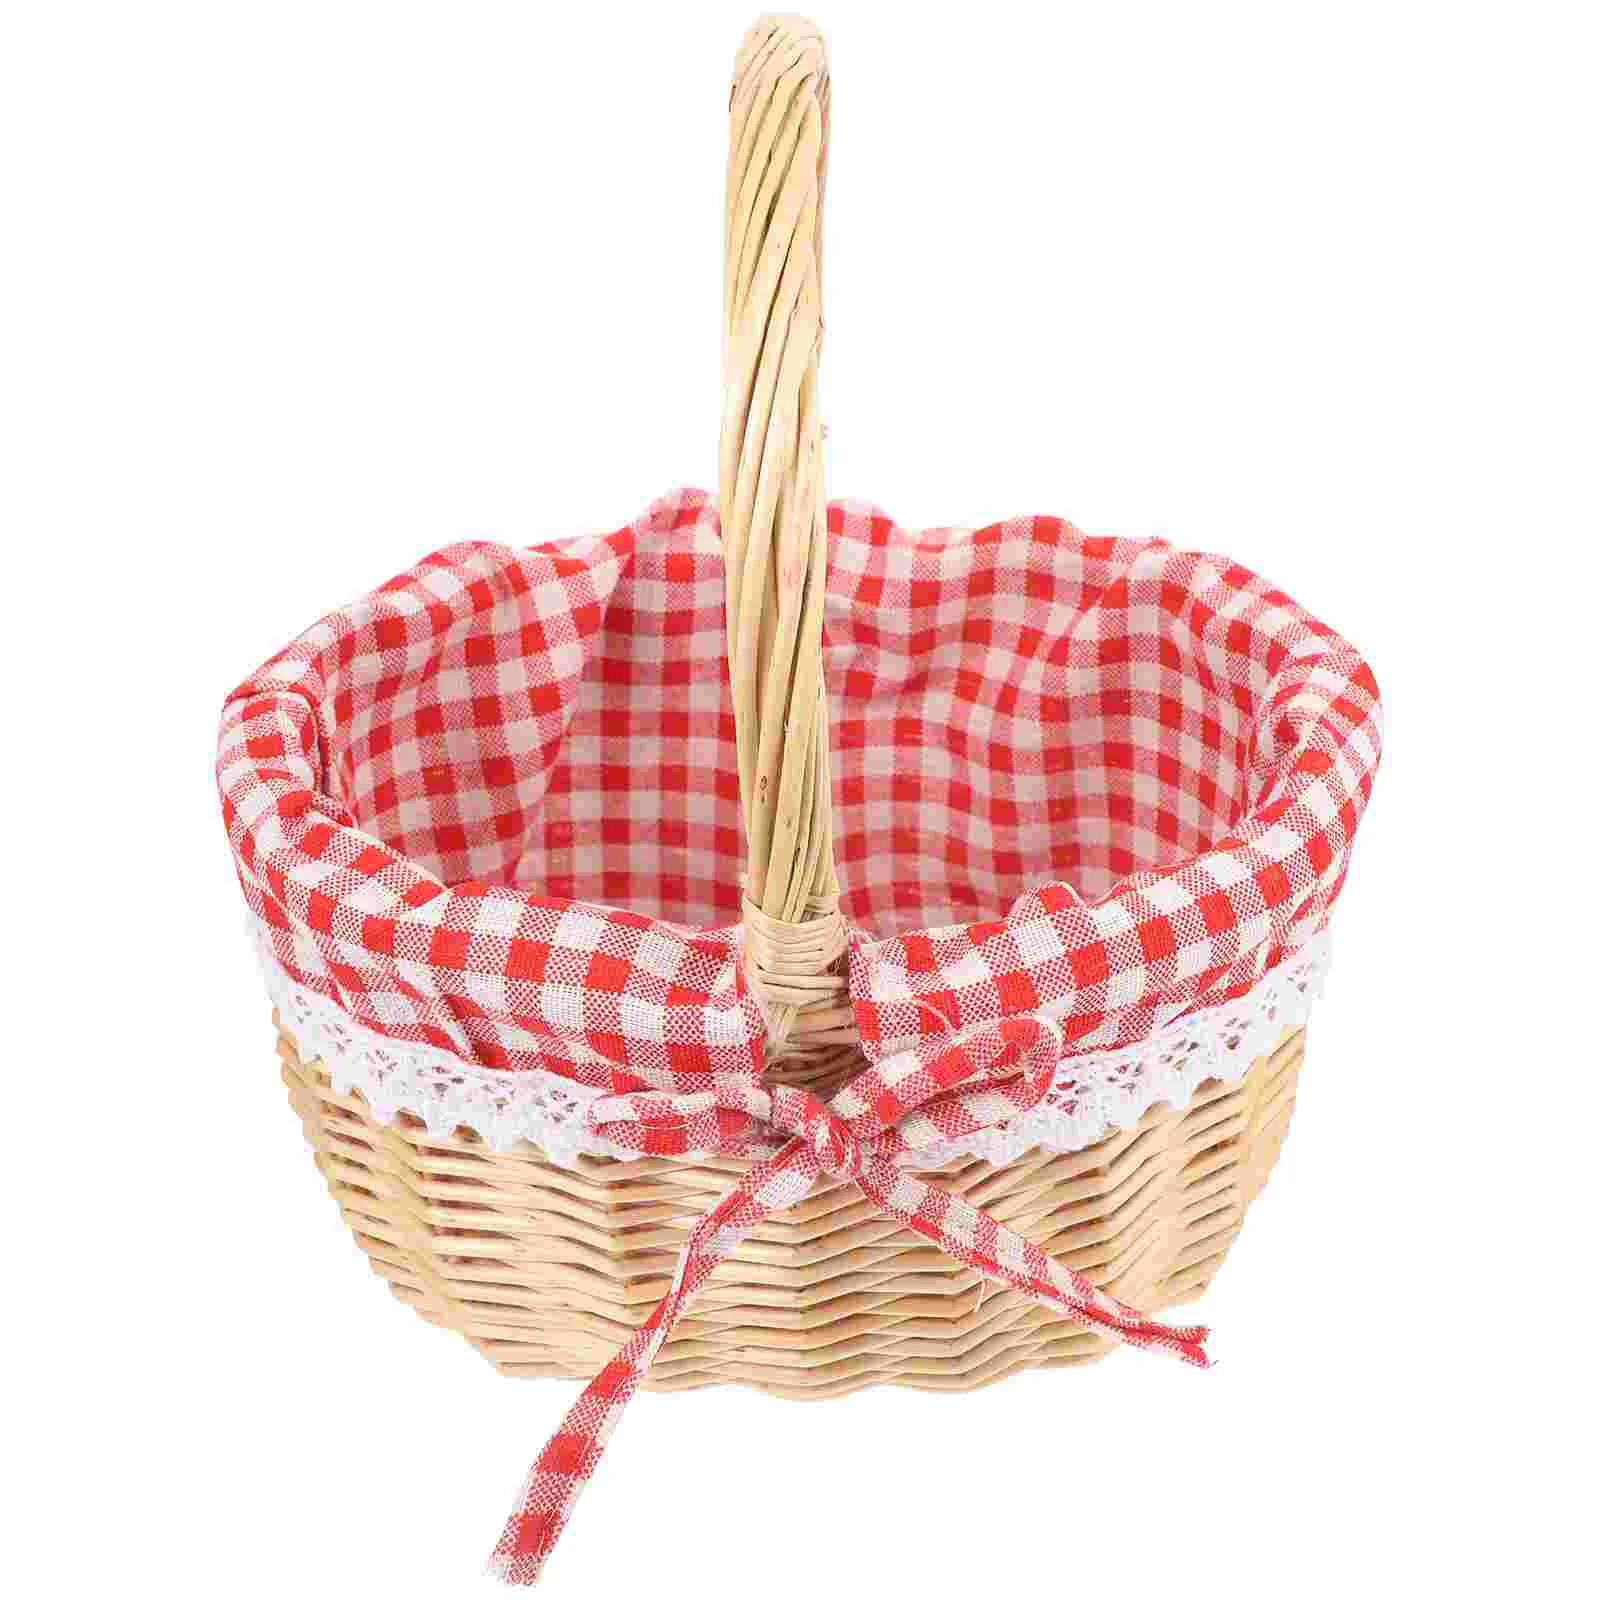 

Woven Wicker Bread Baskets With Liner Rattan Wicker Basket Picnic Basket Snack Serving Tray Bread Fruit Sundries Storage Bins